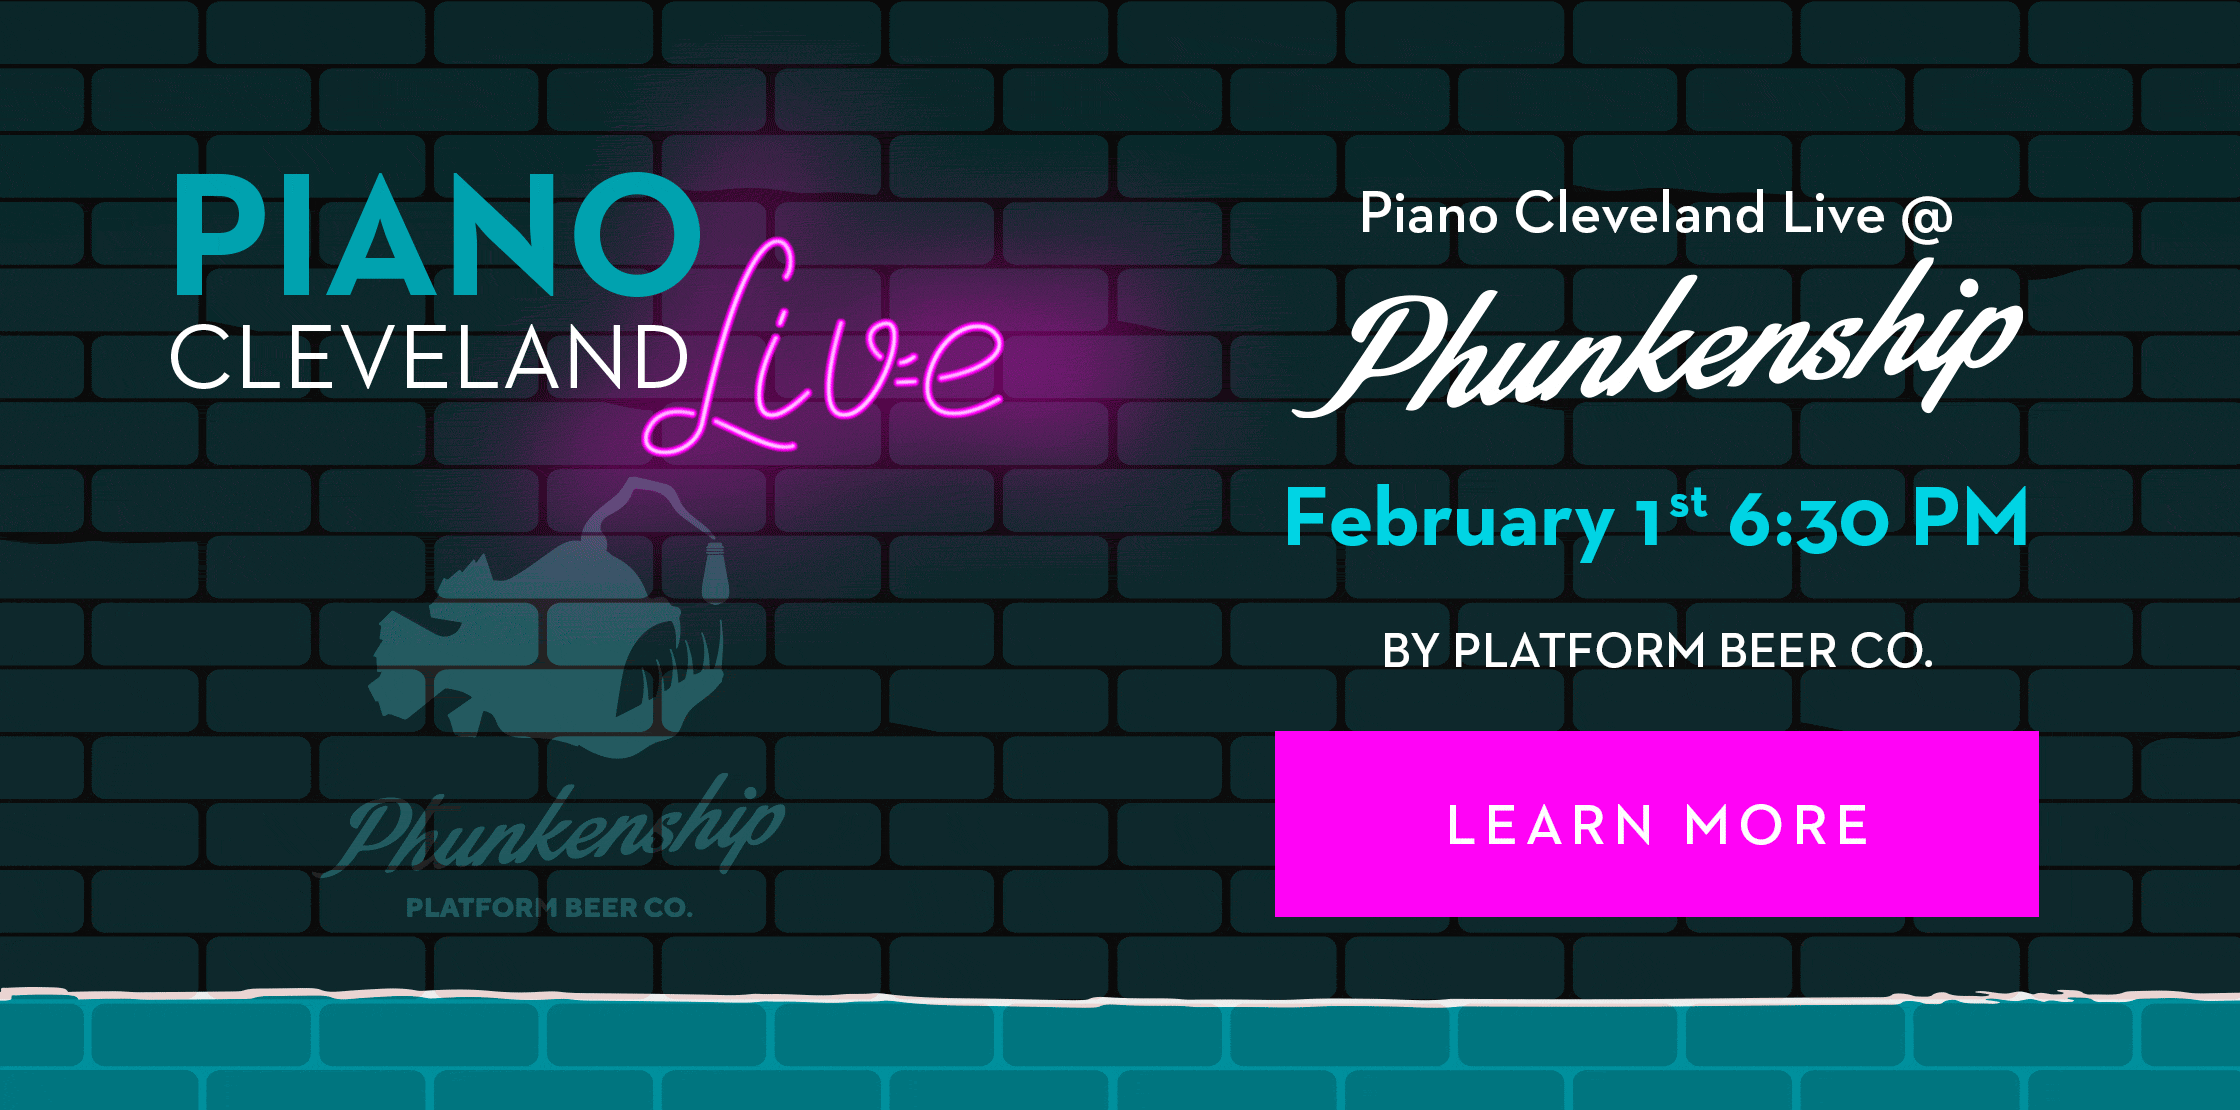 Piano Cleveland Live @Phunkenship January 1, 6:30PM